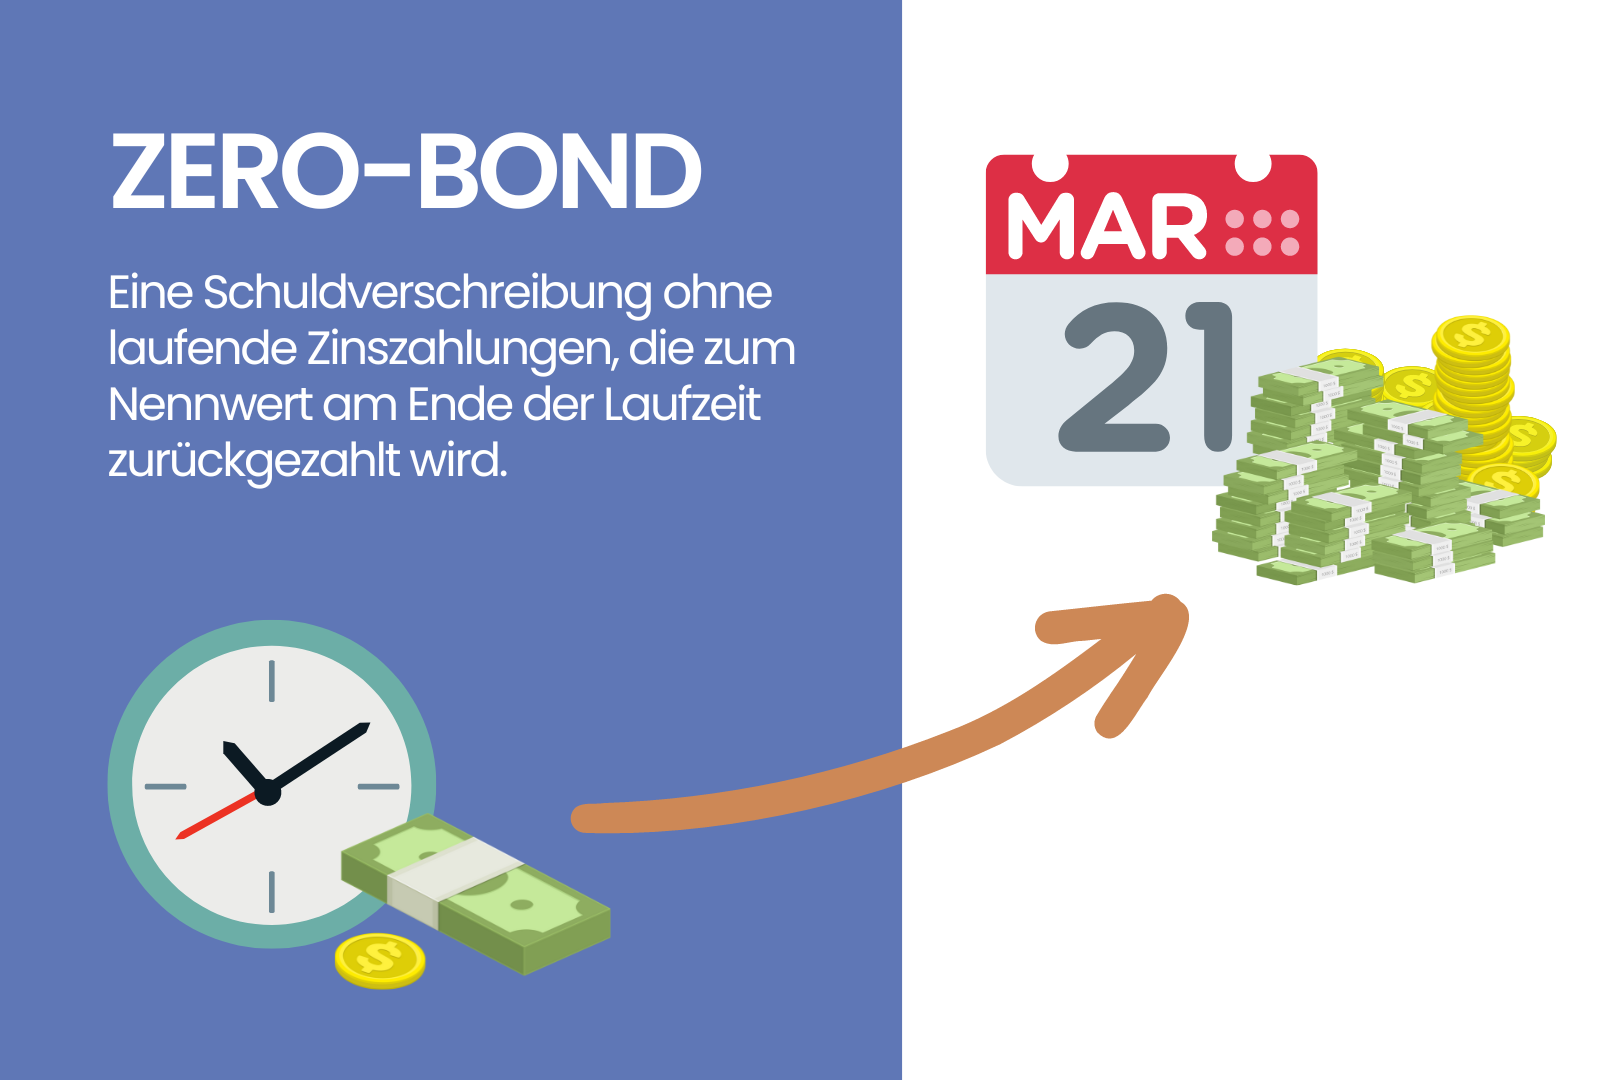 Zero-Bond Definition